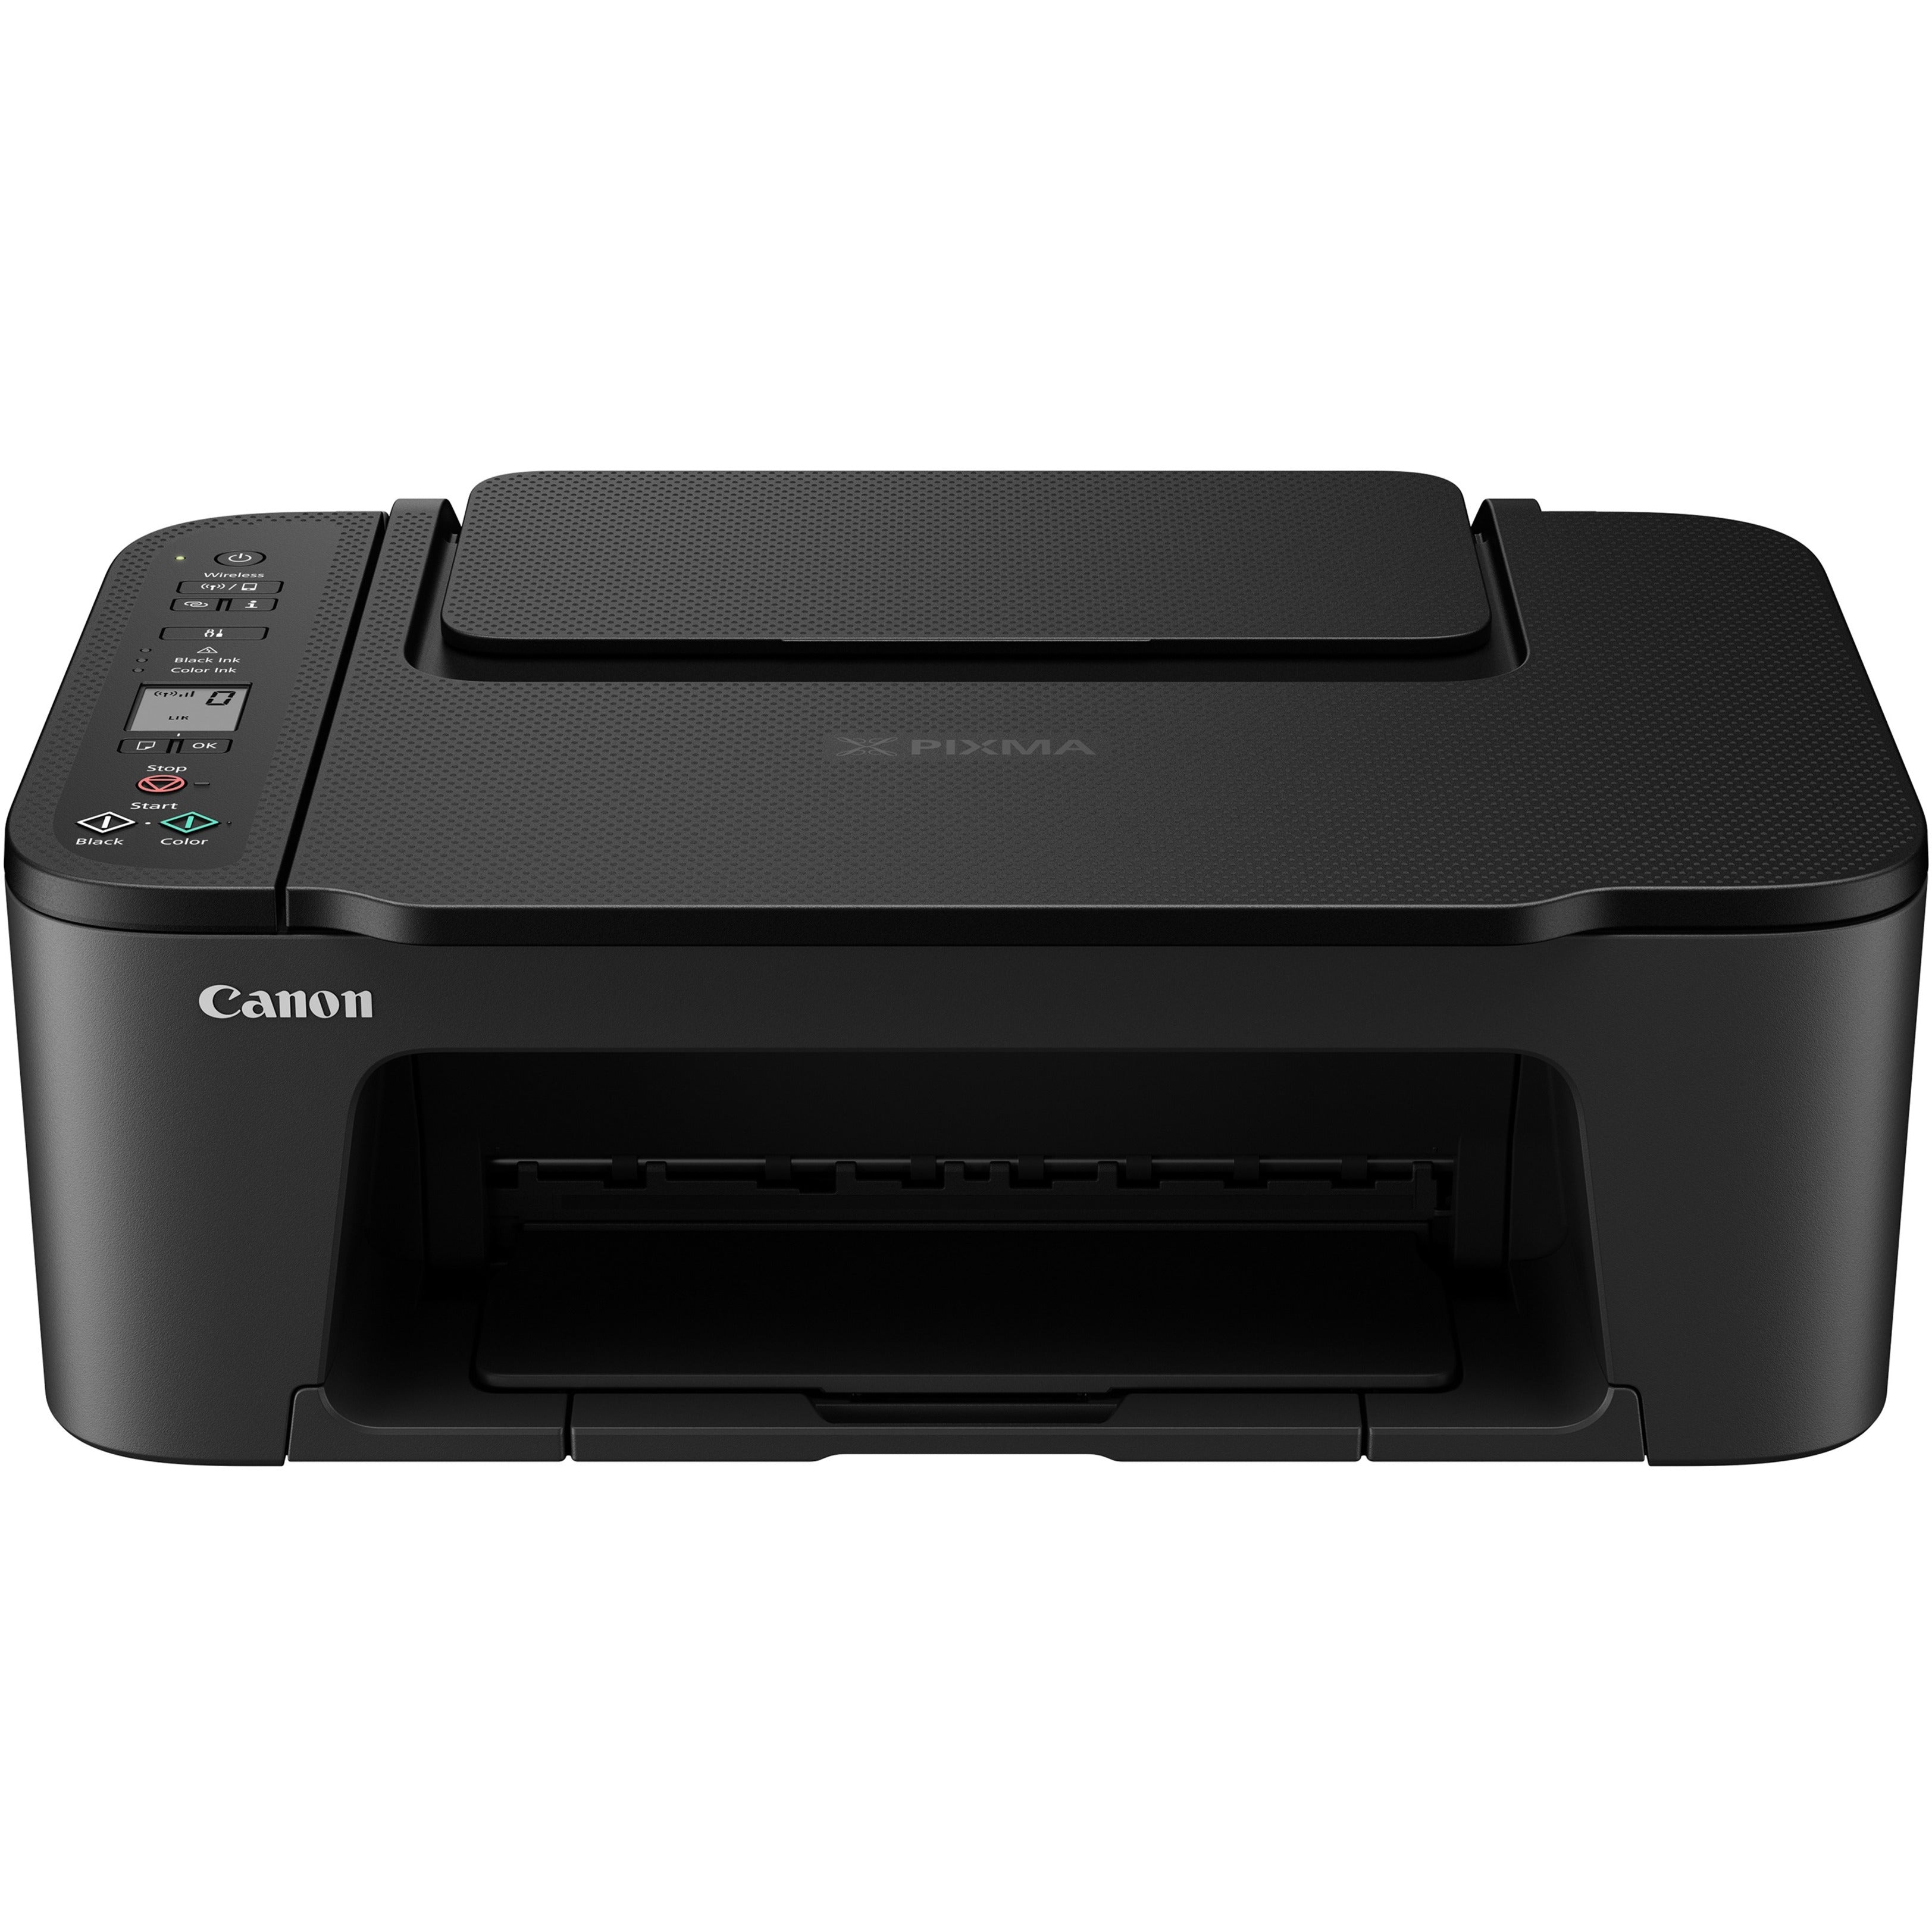 Canon 4977C002 PIXMA TS3520 Wireless All-In-One Inkjet Printer, Black